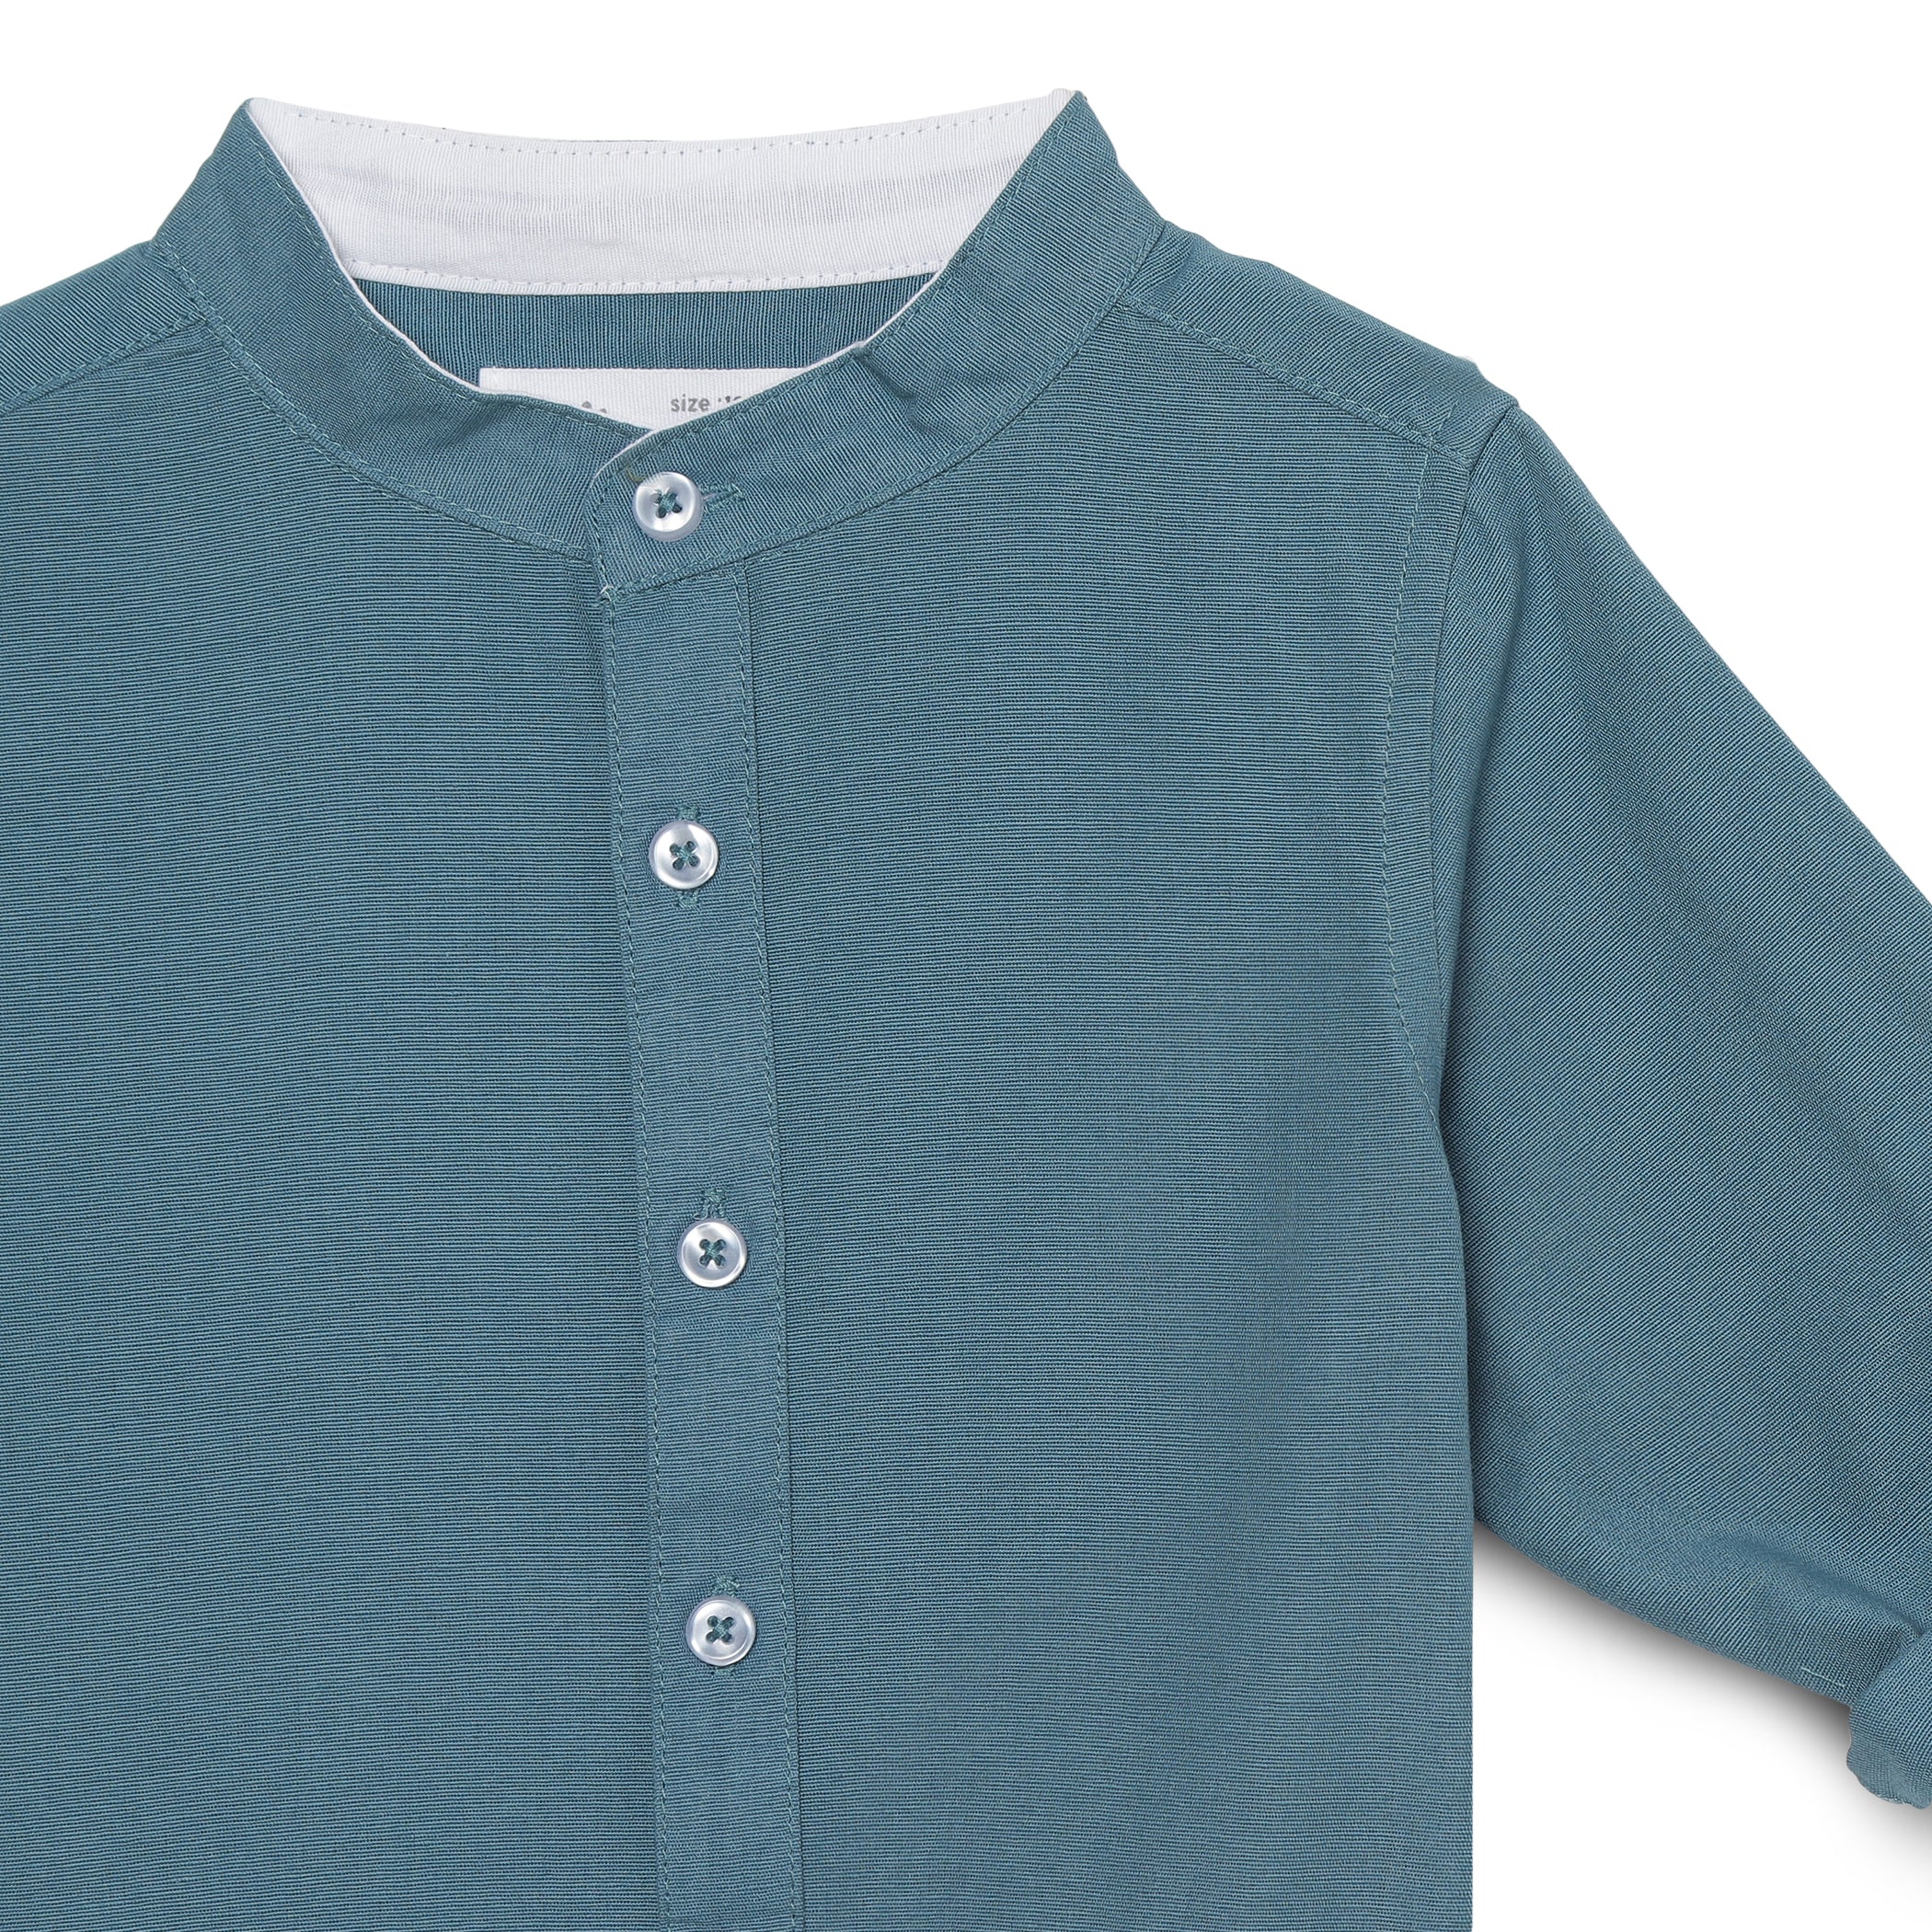 Baby Boys Grandad Collar Neck Roll Up Sleeve Blue Shirt